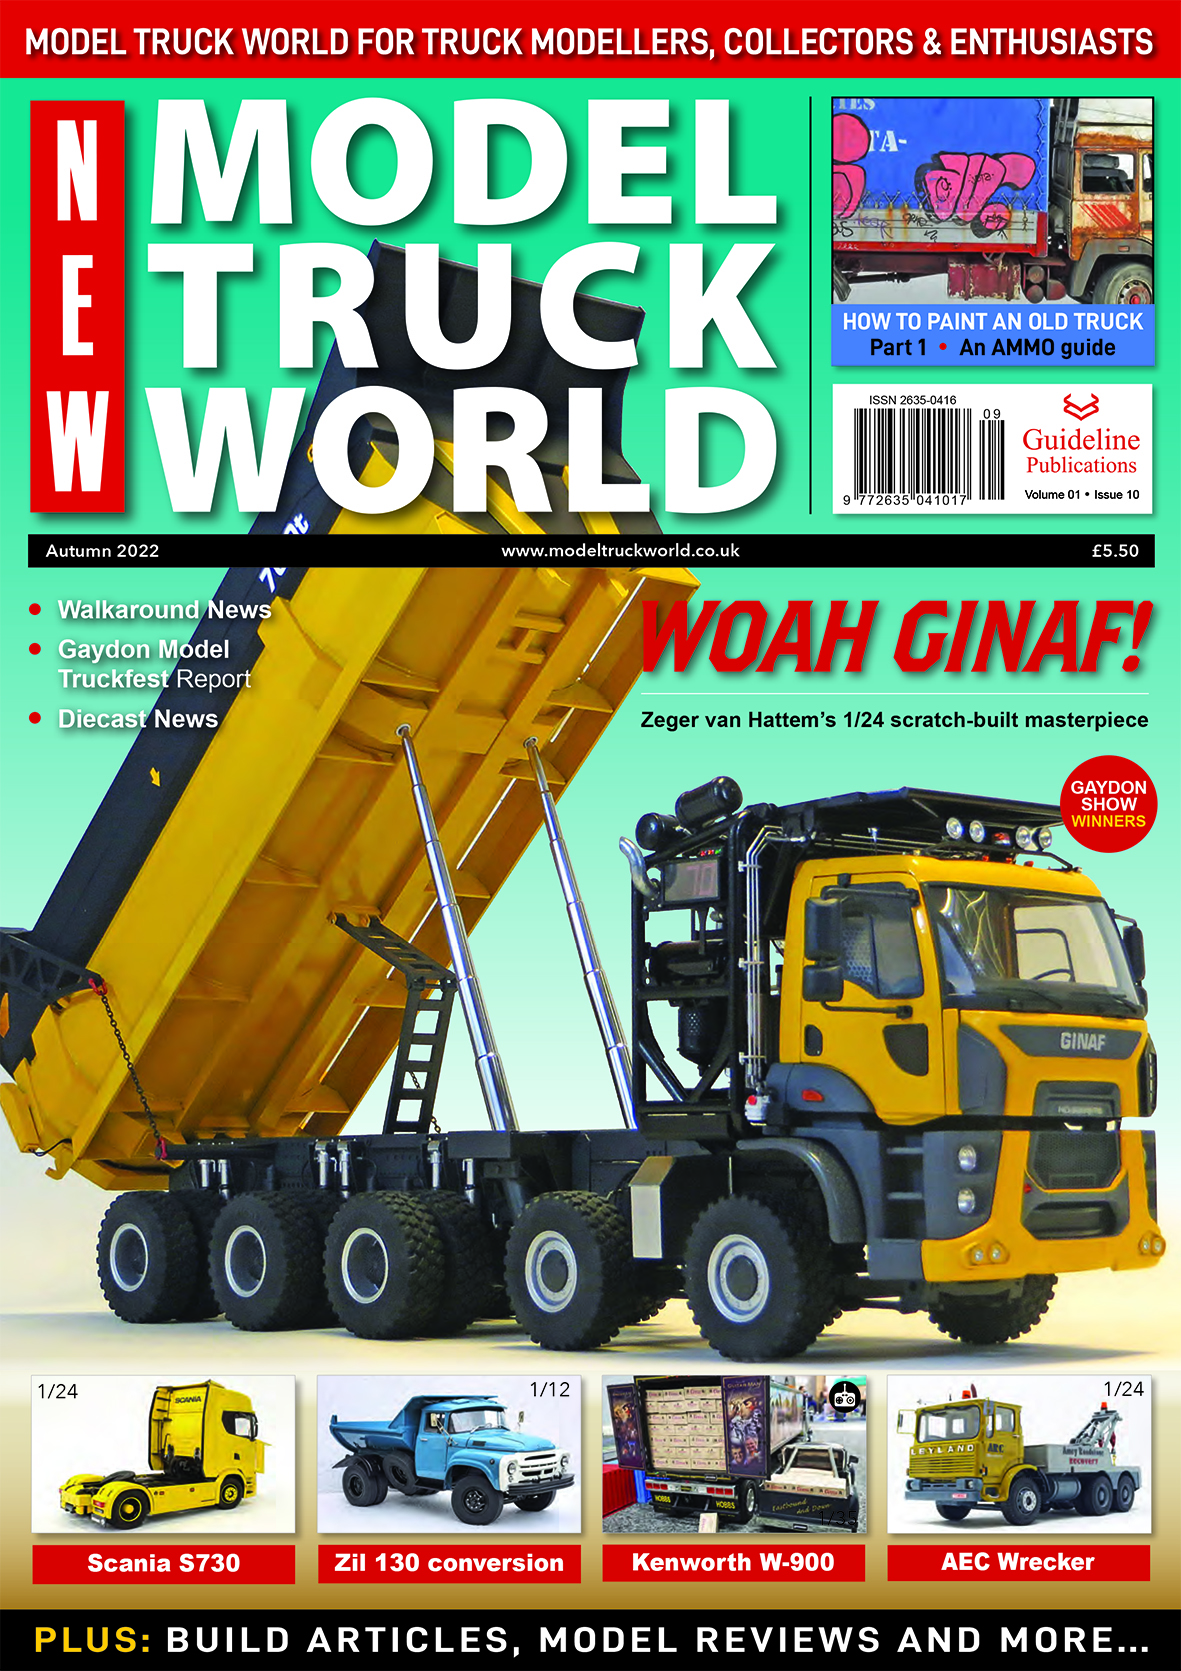 Guideline Publications Ltd New Model Truck World  - Issue 10 Autumn 22 